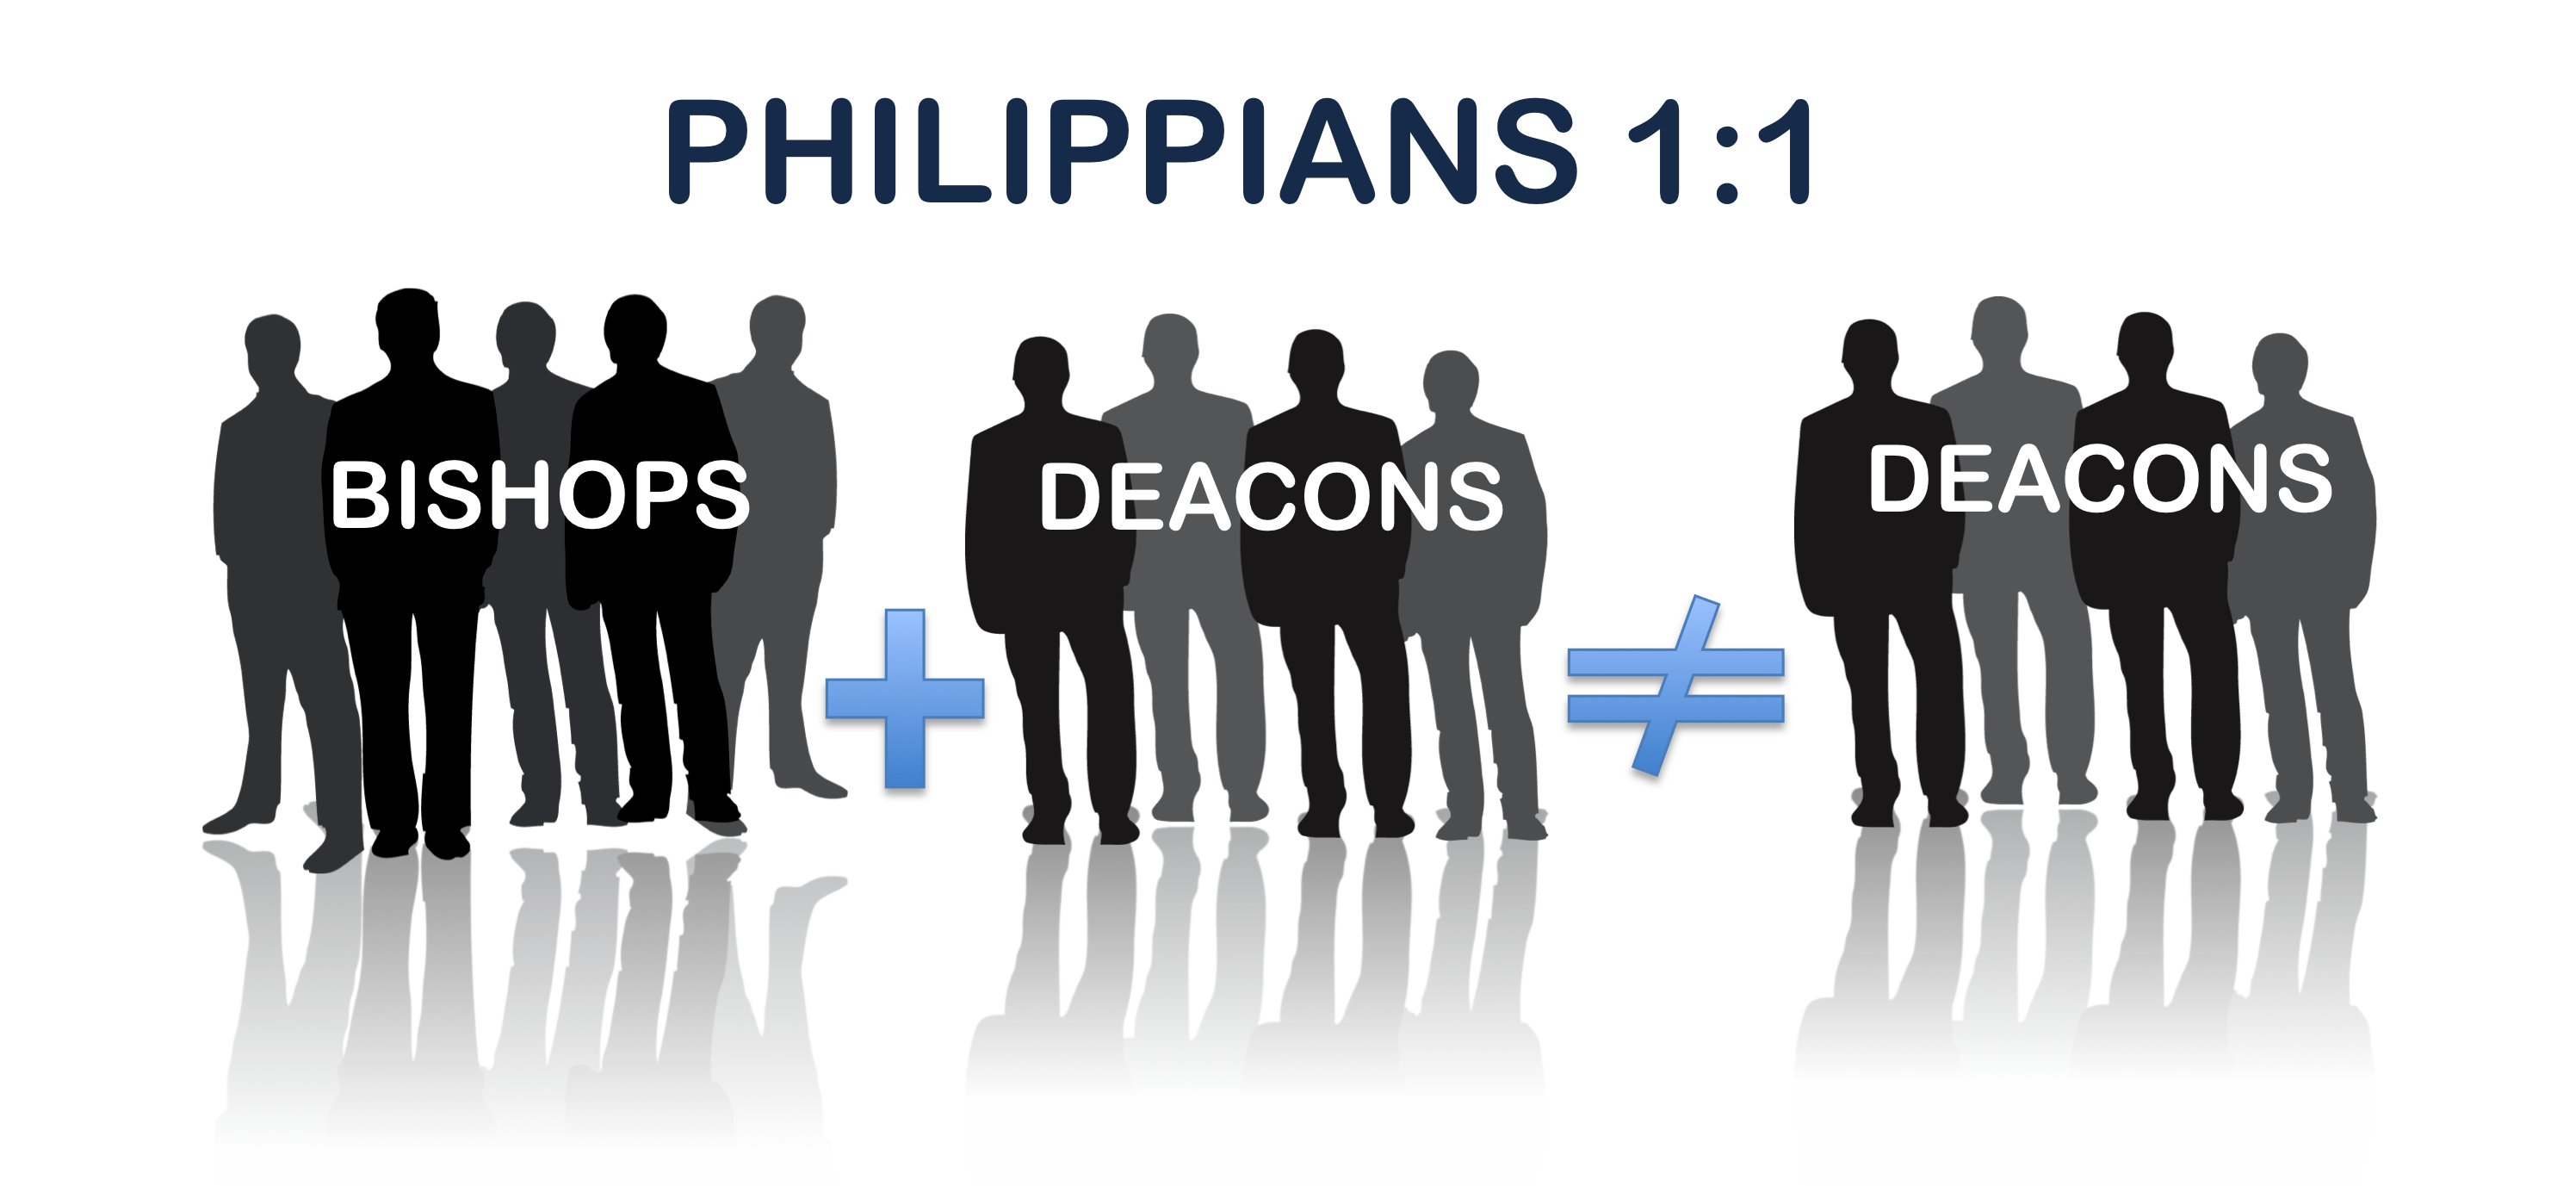 deacons3